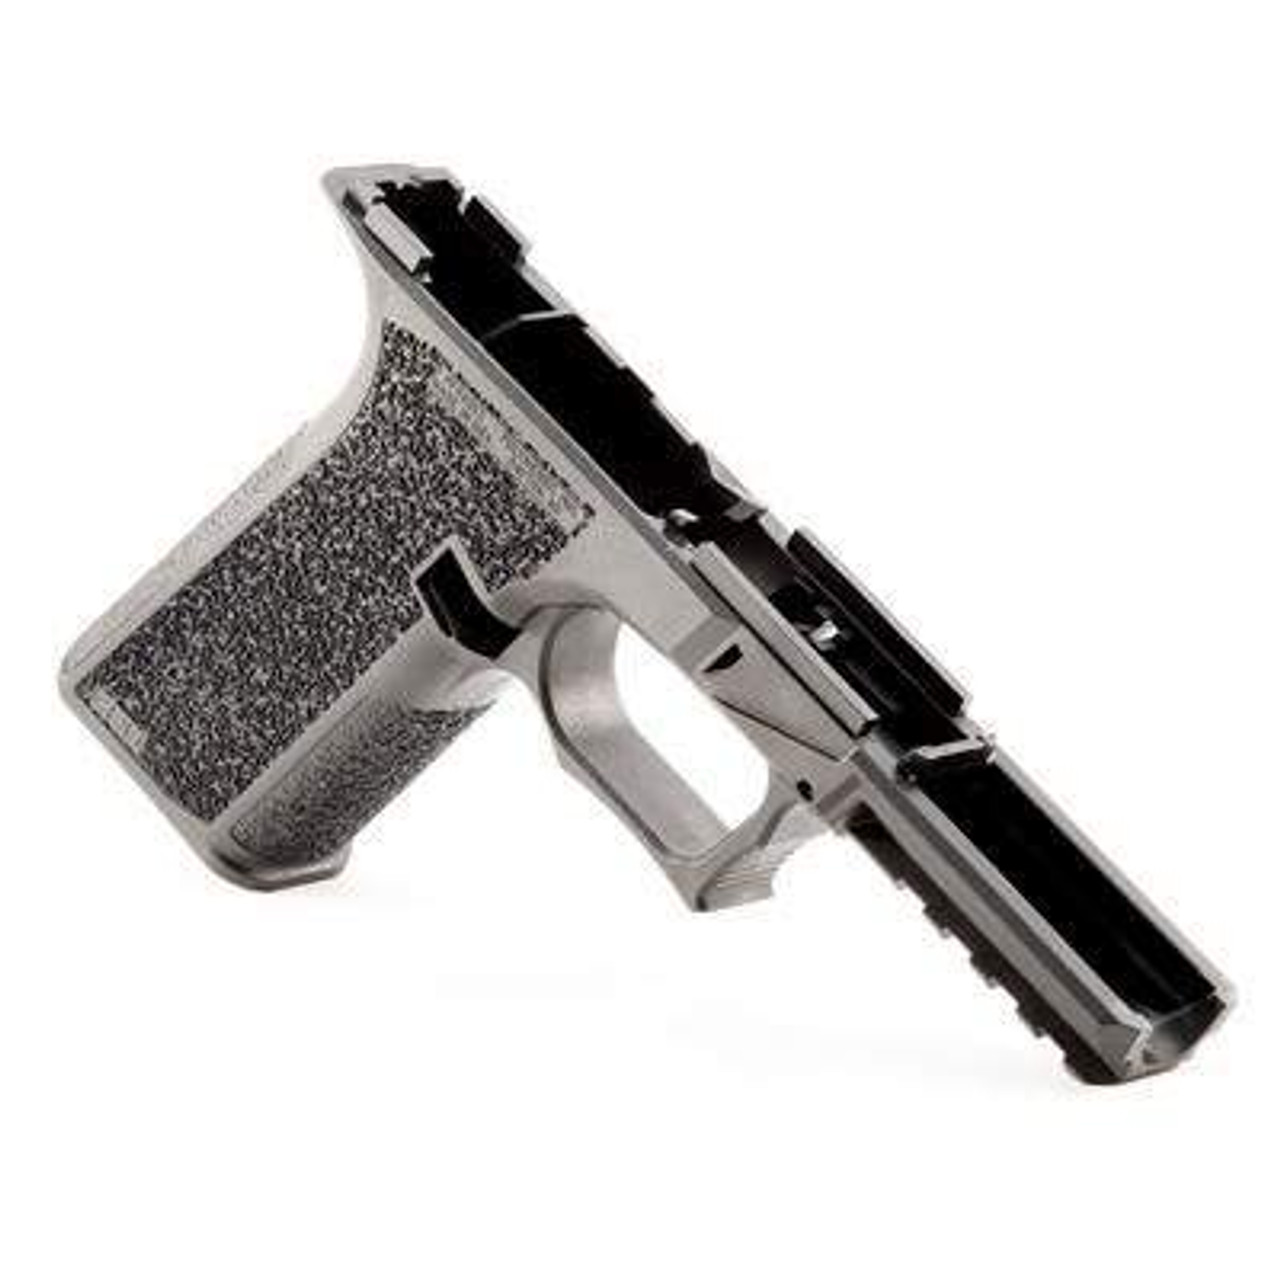 Polymer80 PF940v2 80% Pistol Blank GLOCK®  17, 22, 31, 34, 35 Compatible